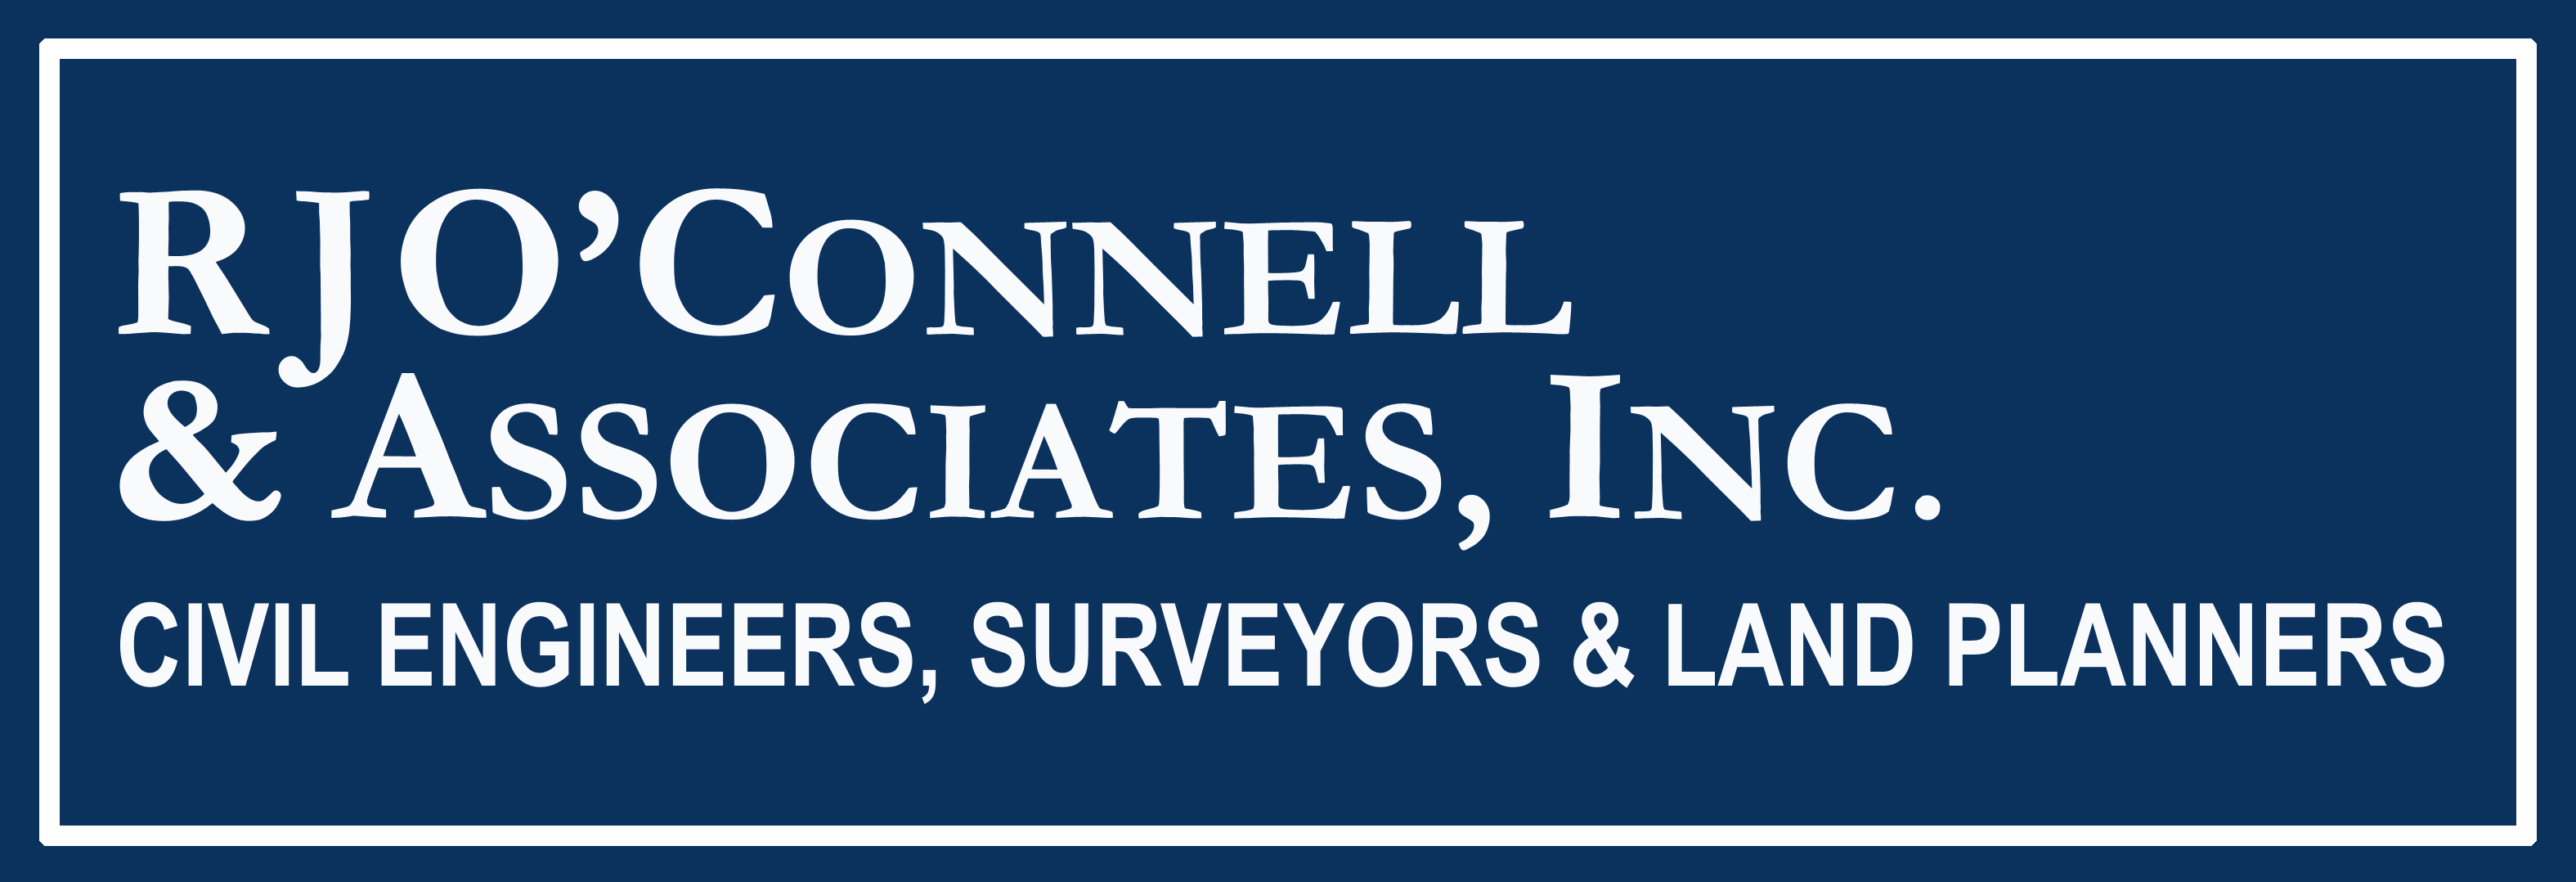 RJ O’Connell & Associates, Inc.